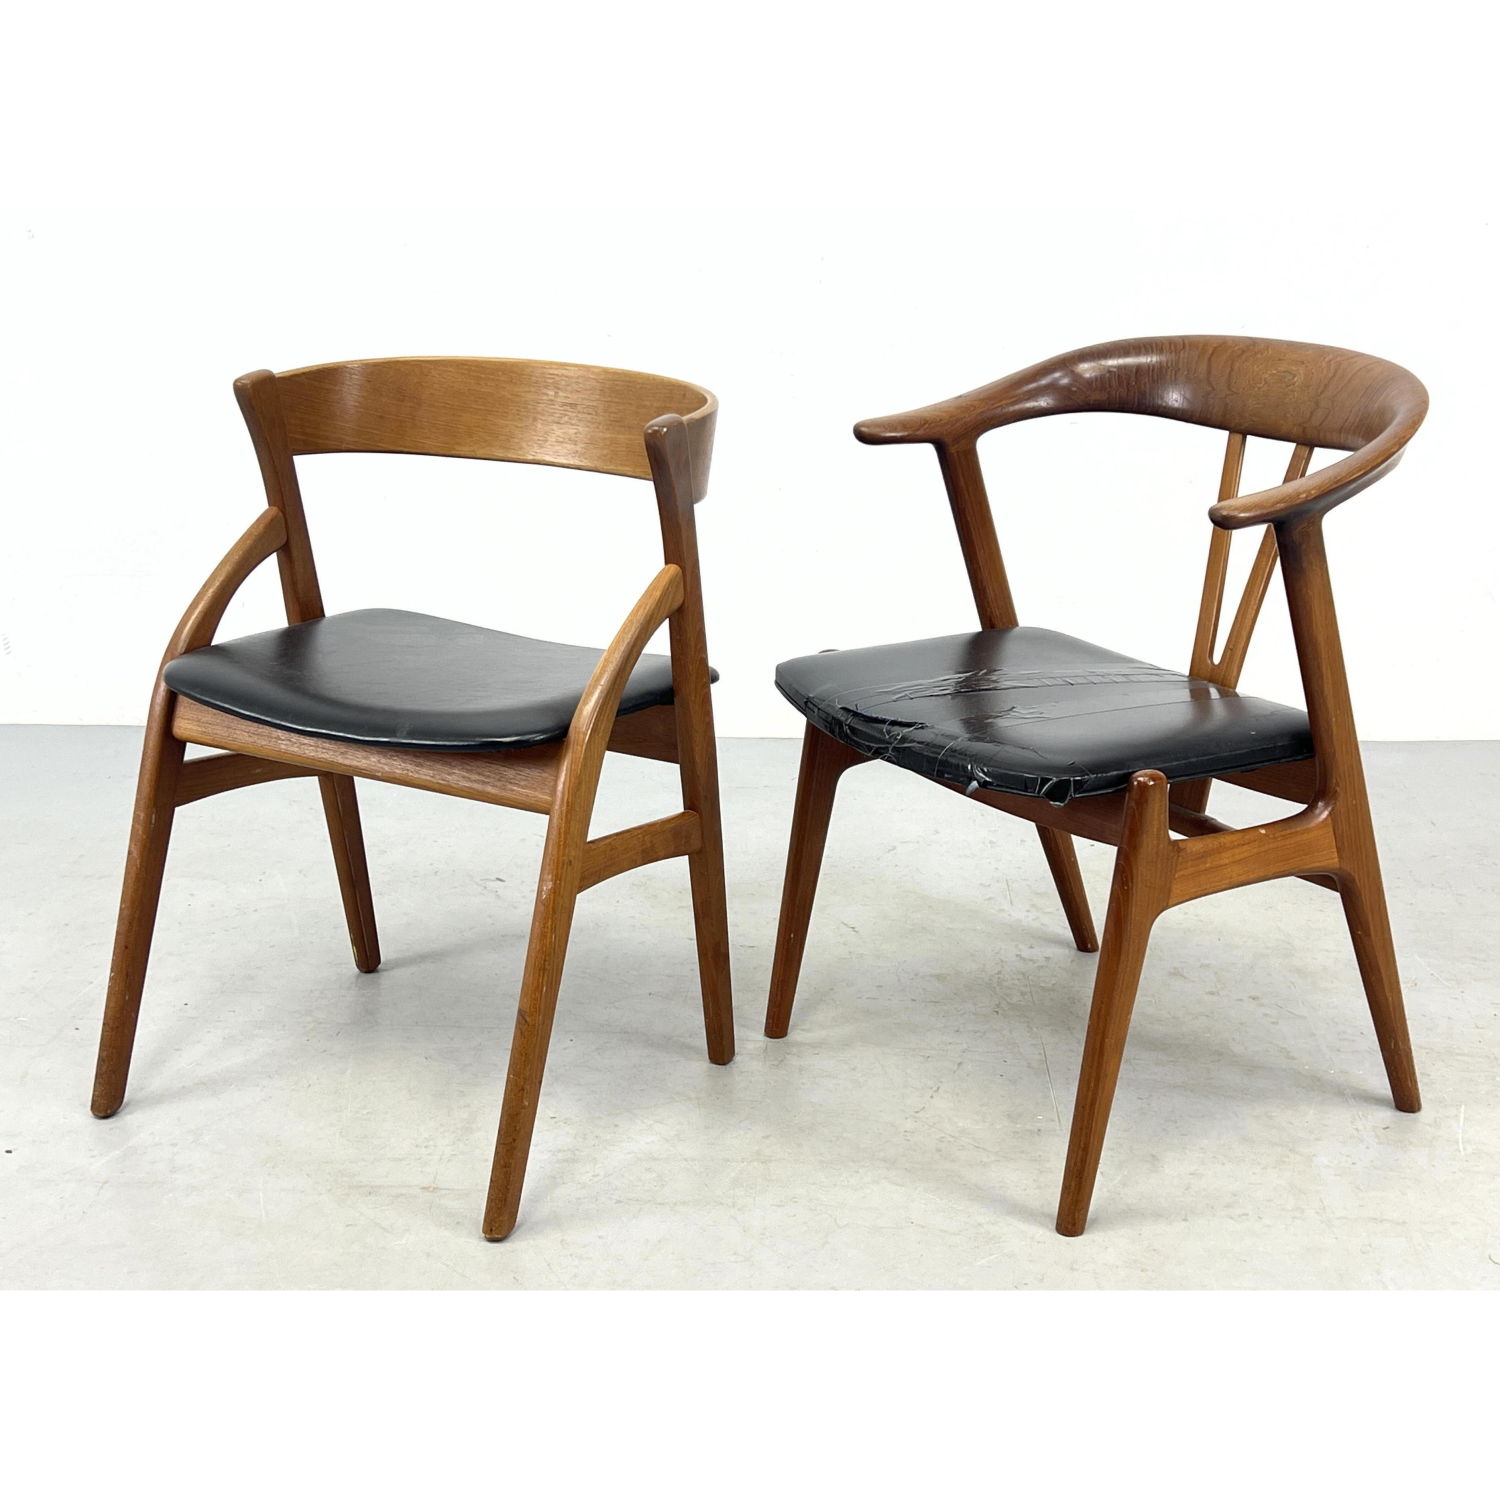 2 Danish Modern Teak Chairs. Torbjorn